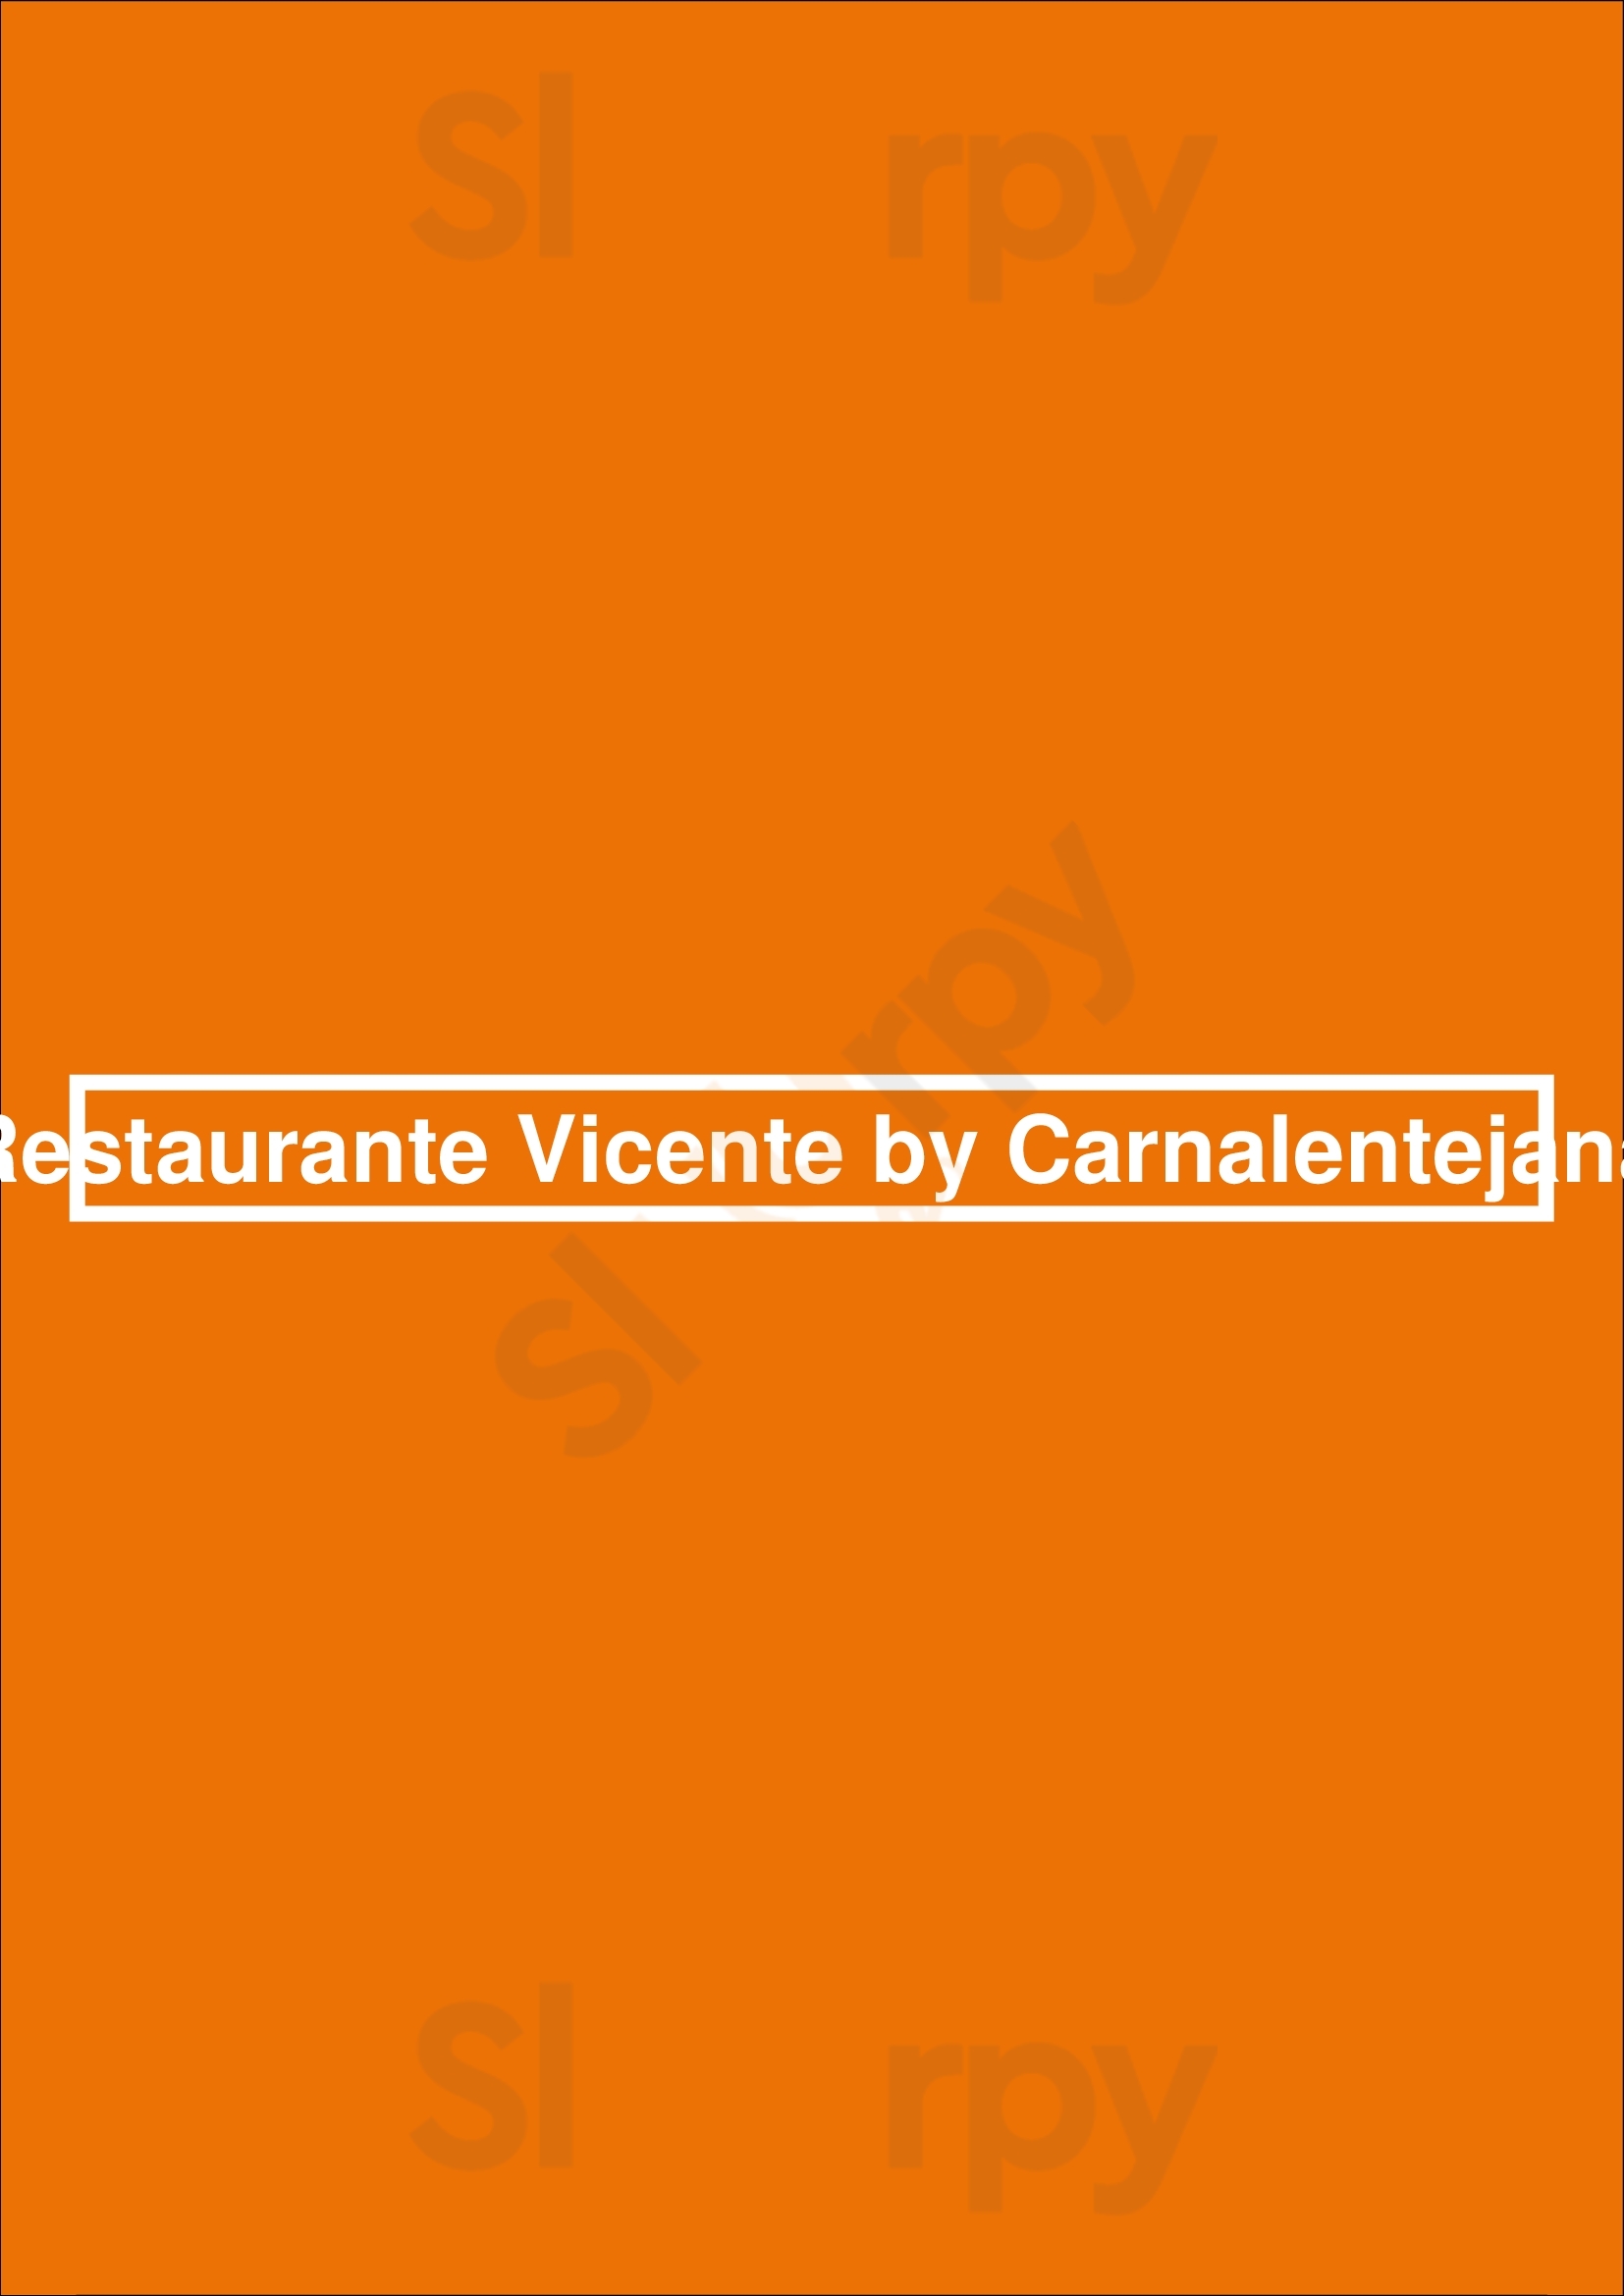 Restaurante Vicente By Carnalentejana Lisboa Menu - 1